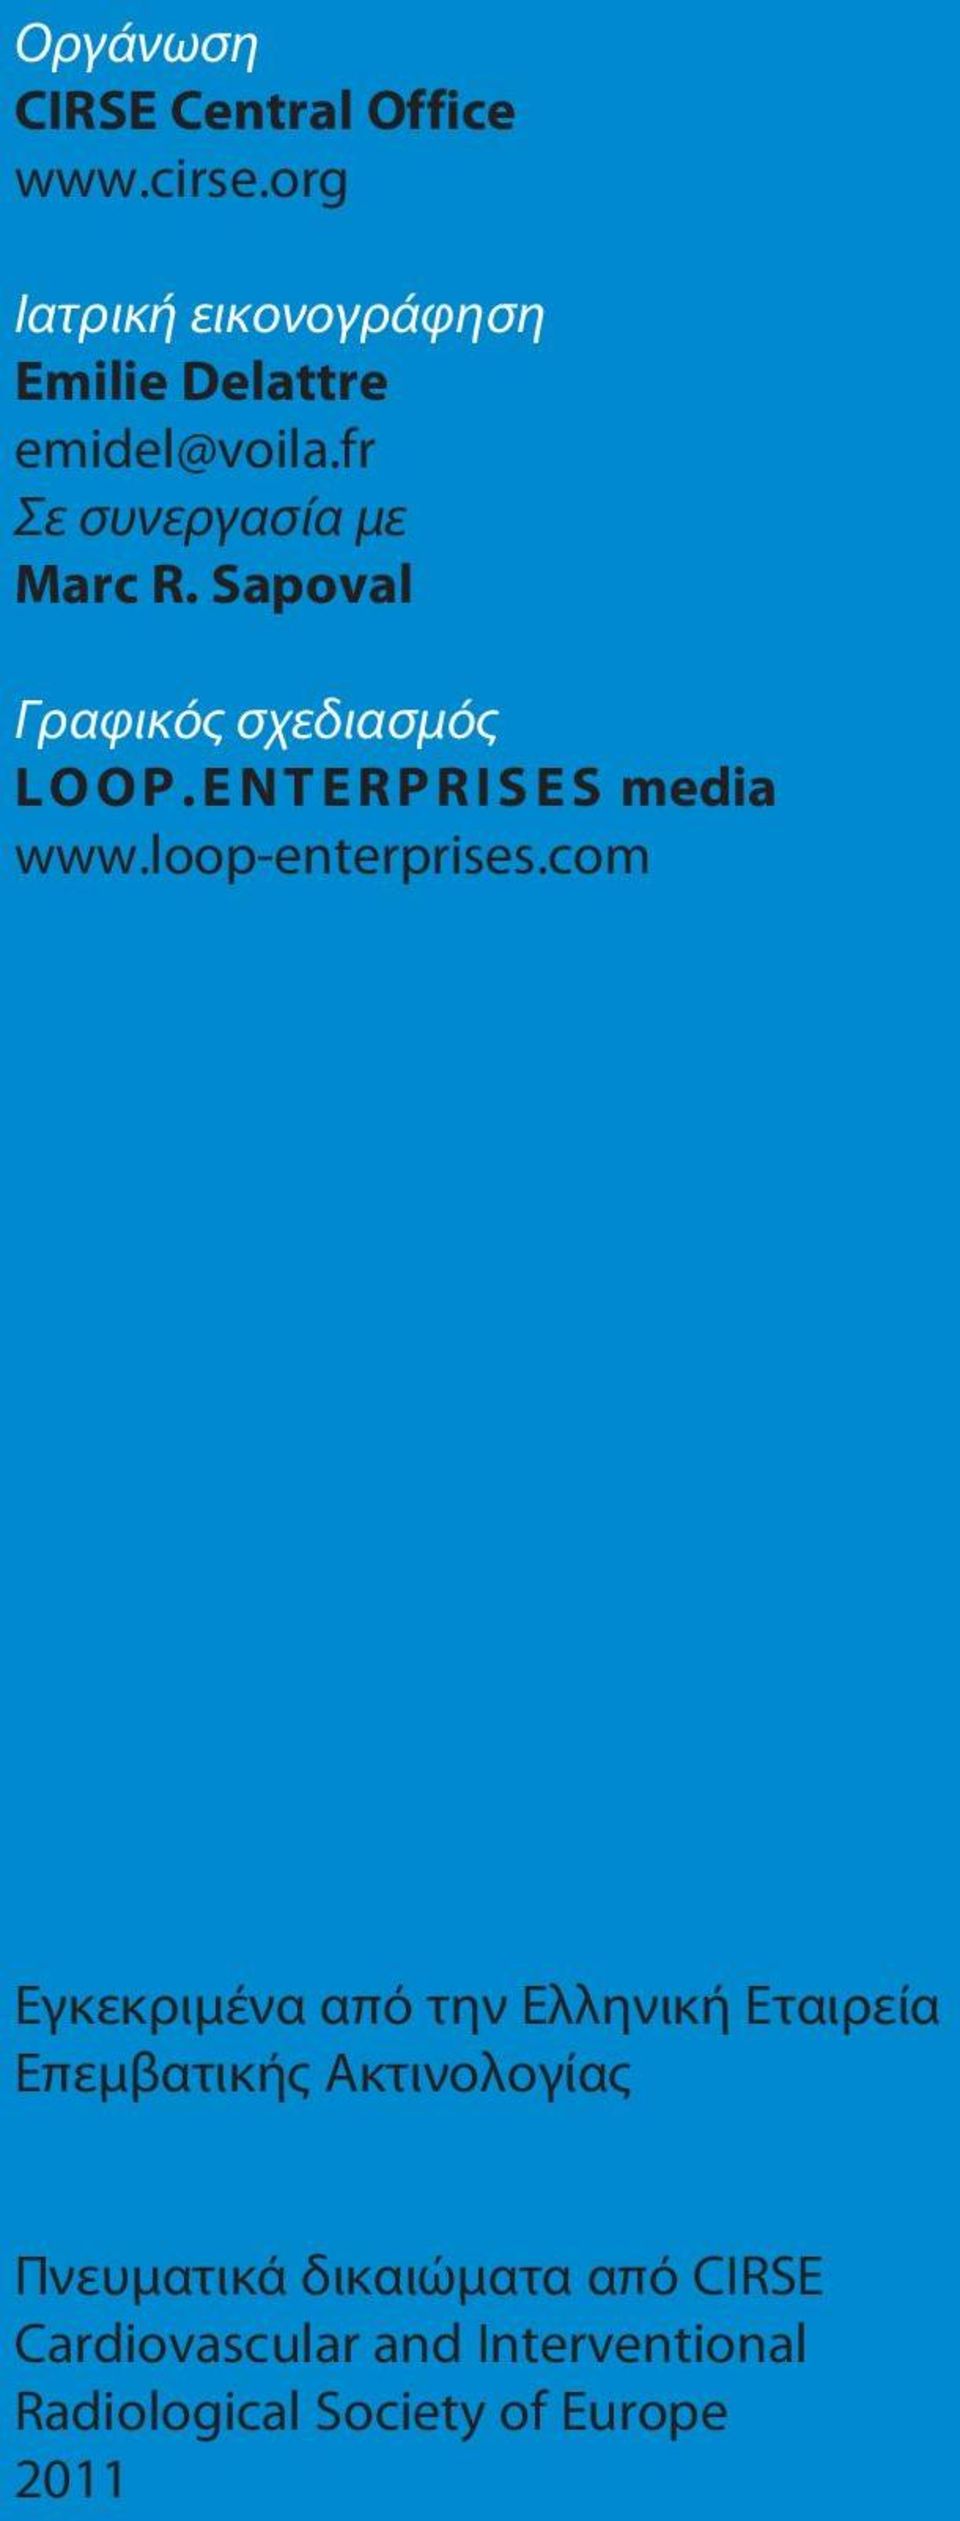 Sapoval Γραφικός σχεδιασμός LOOP.ENTERPRISES media www.loop-enterprises.